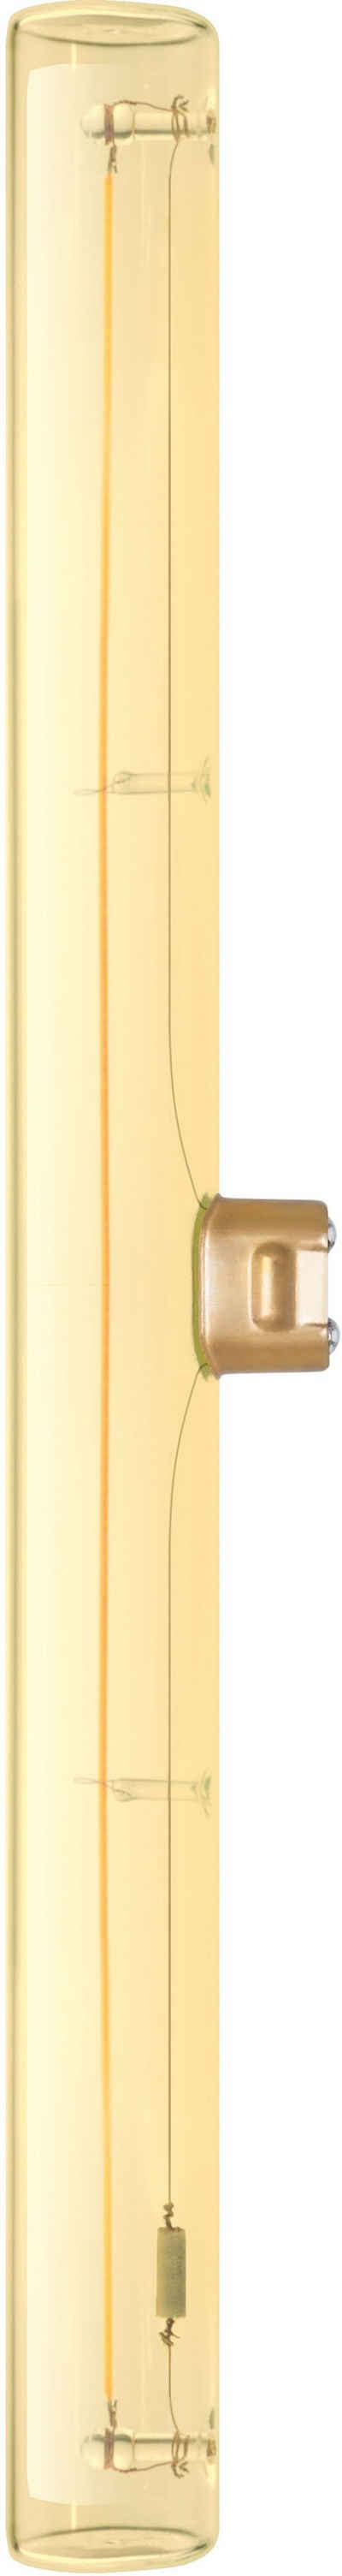 SEGULA LED-Leuchtmittel LED Linienlampe S14d 300mm gold, S14d, Warmweiß, dimmbar, Linienlampe S14d, 300mm gold